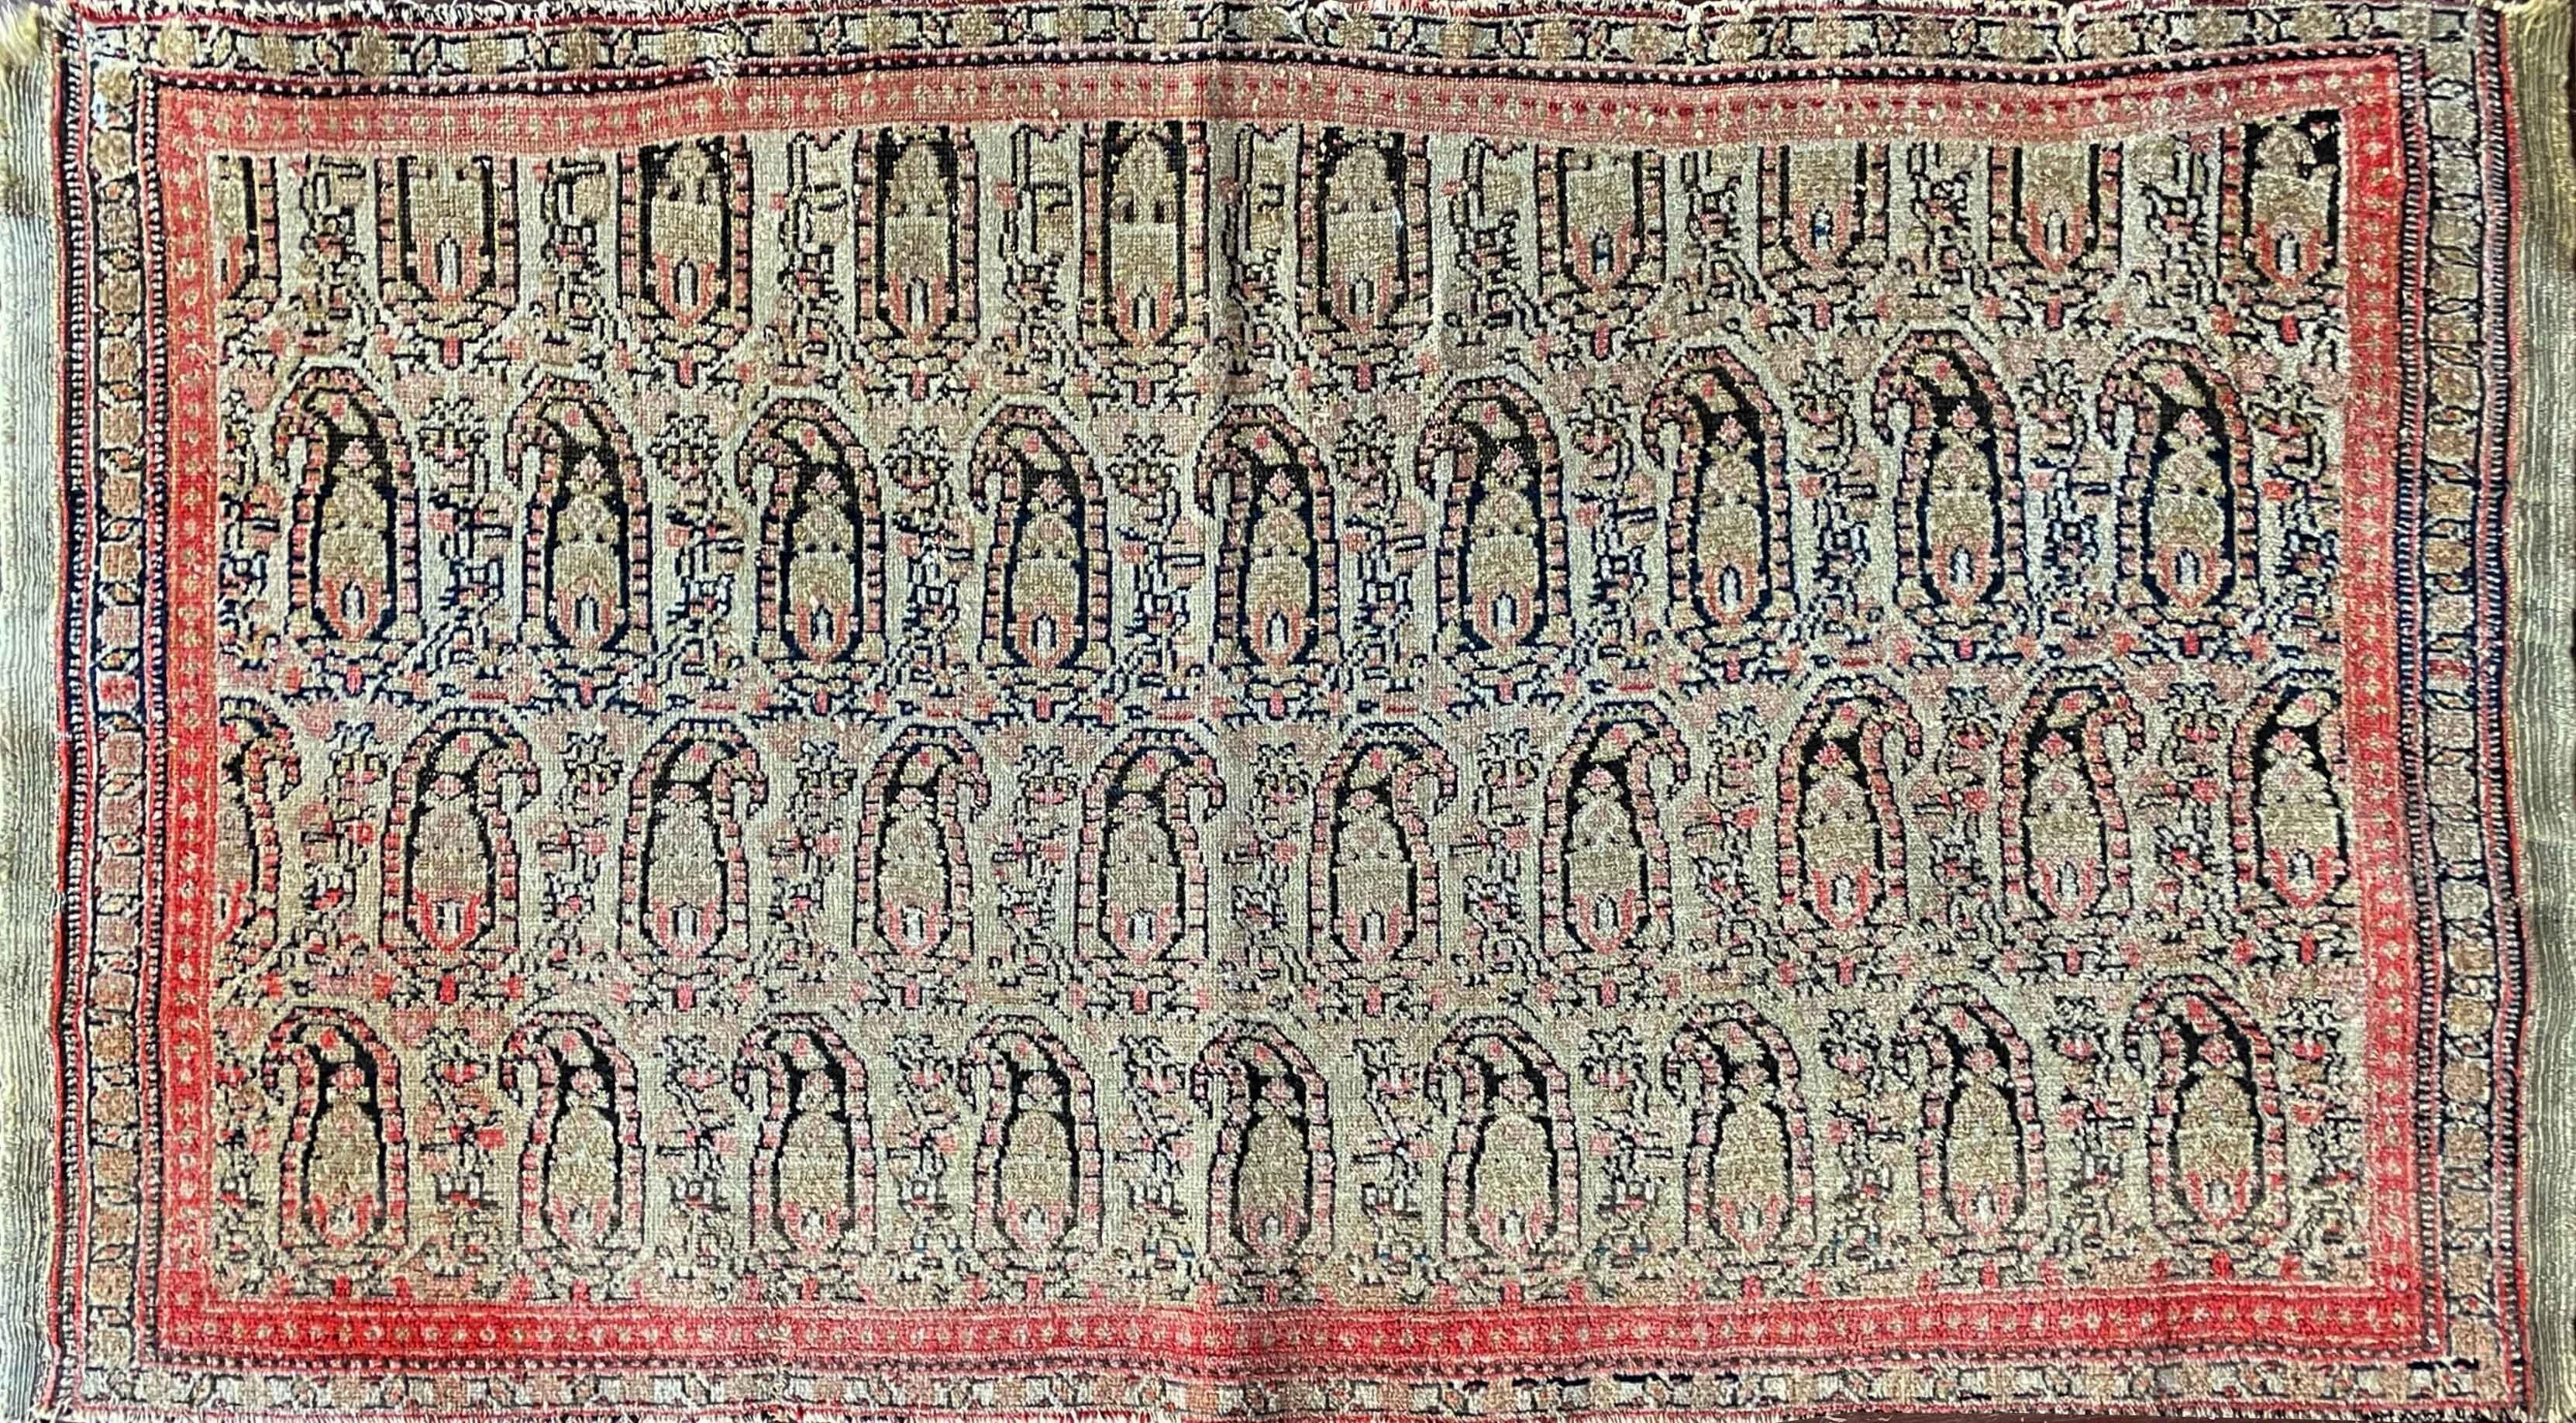 Wool Antique Persian Senneh Rug, very fine